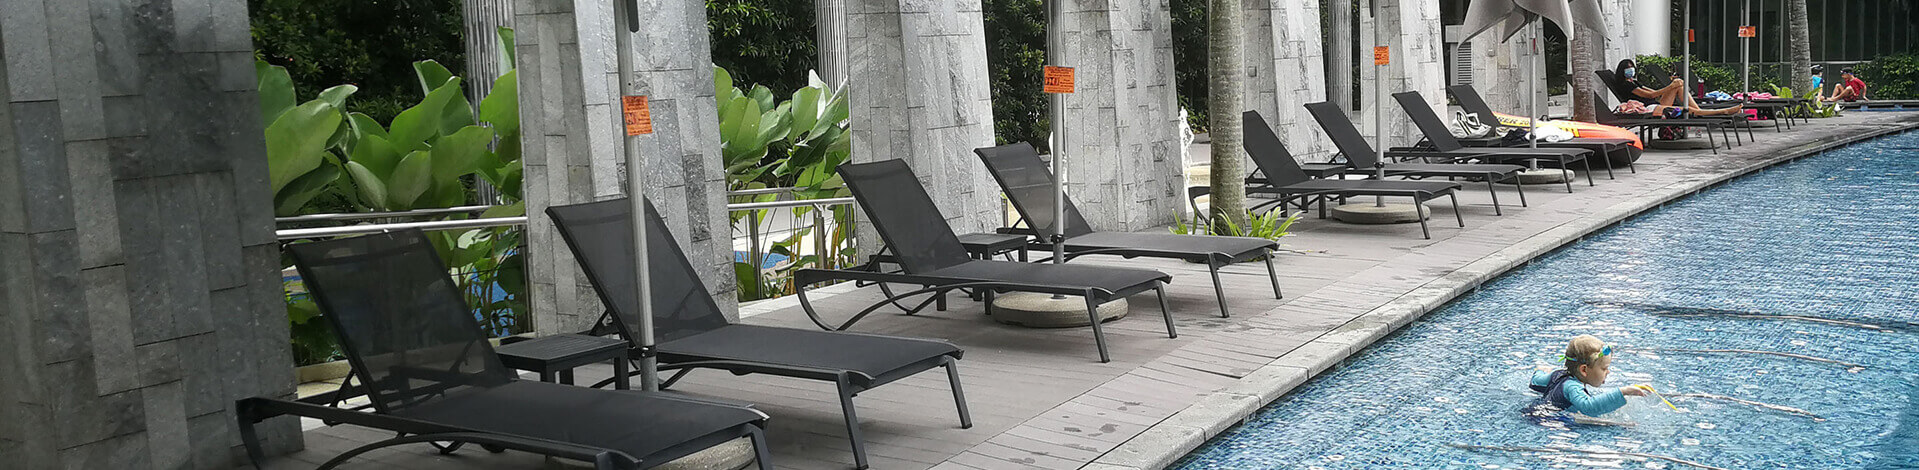 Outdoor Furniture Online Store Singapore | Superdeal Marketing Enterprise